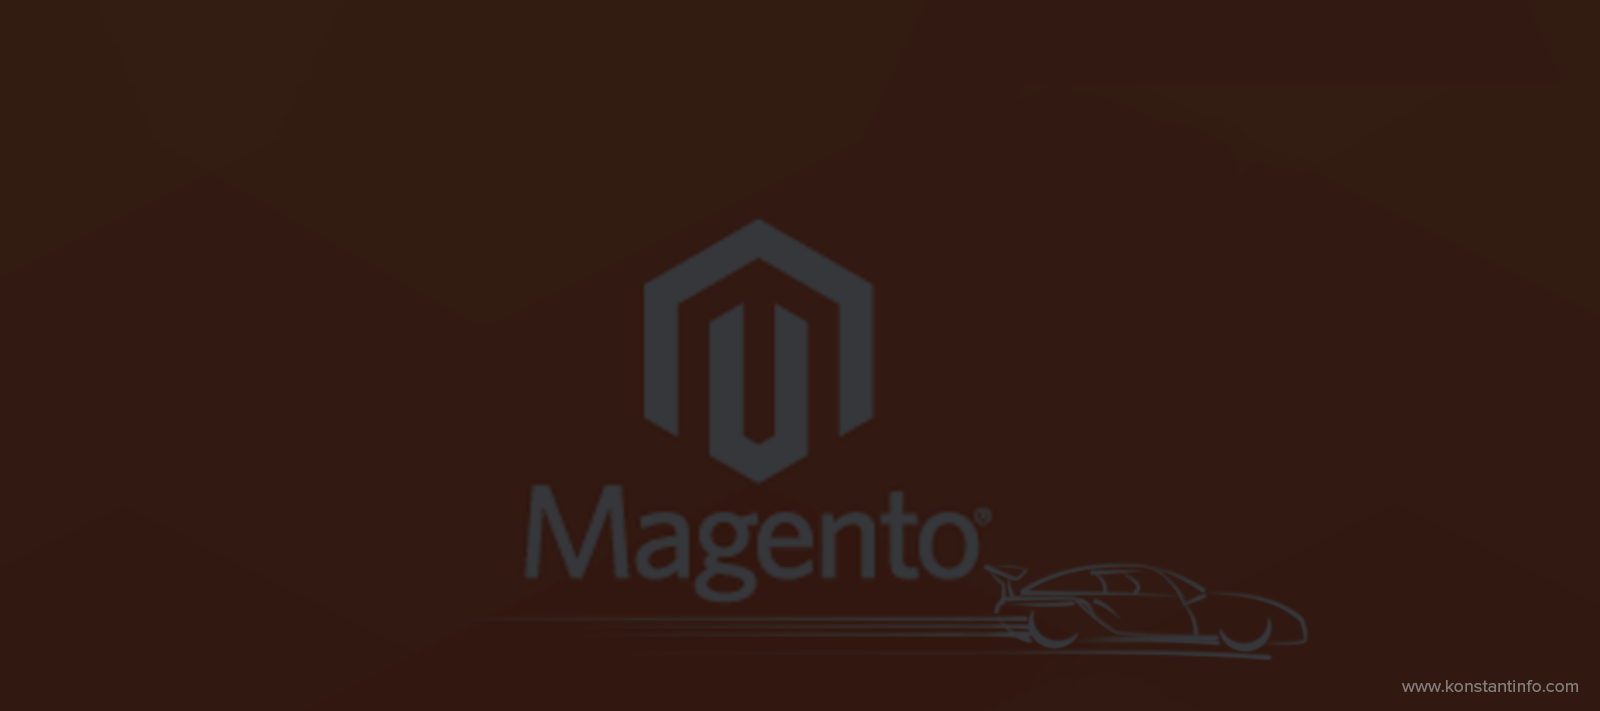 Infographic: Magento – Fastest Growing eCommerce Platform